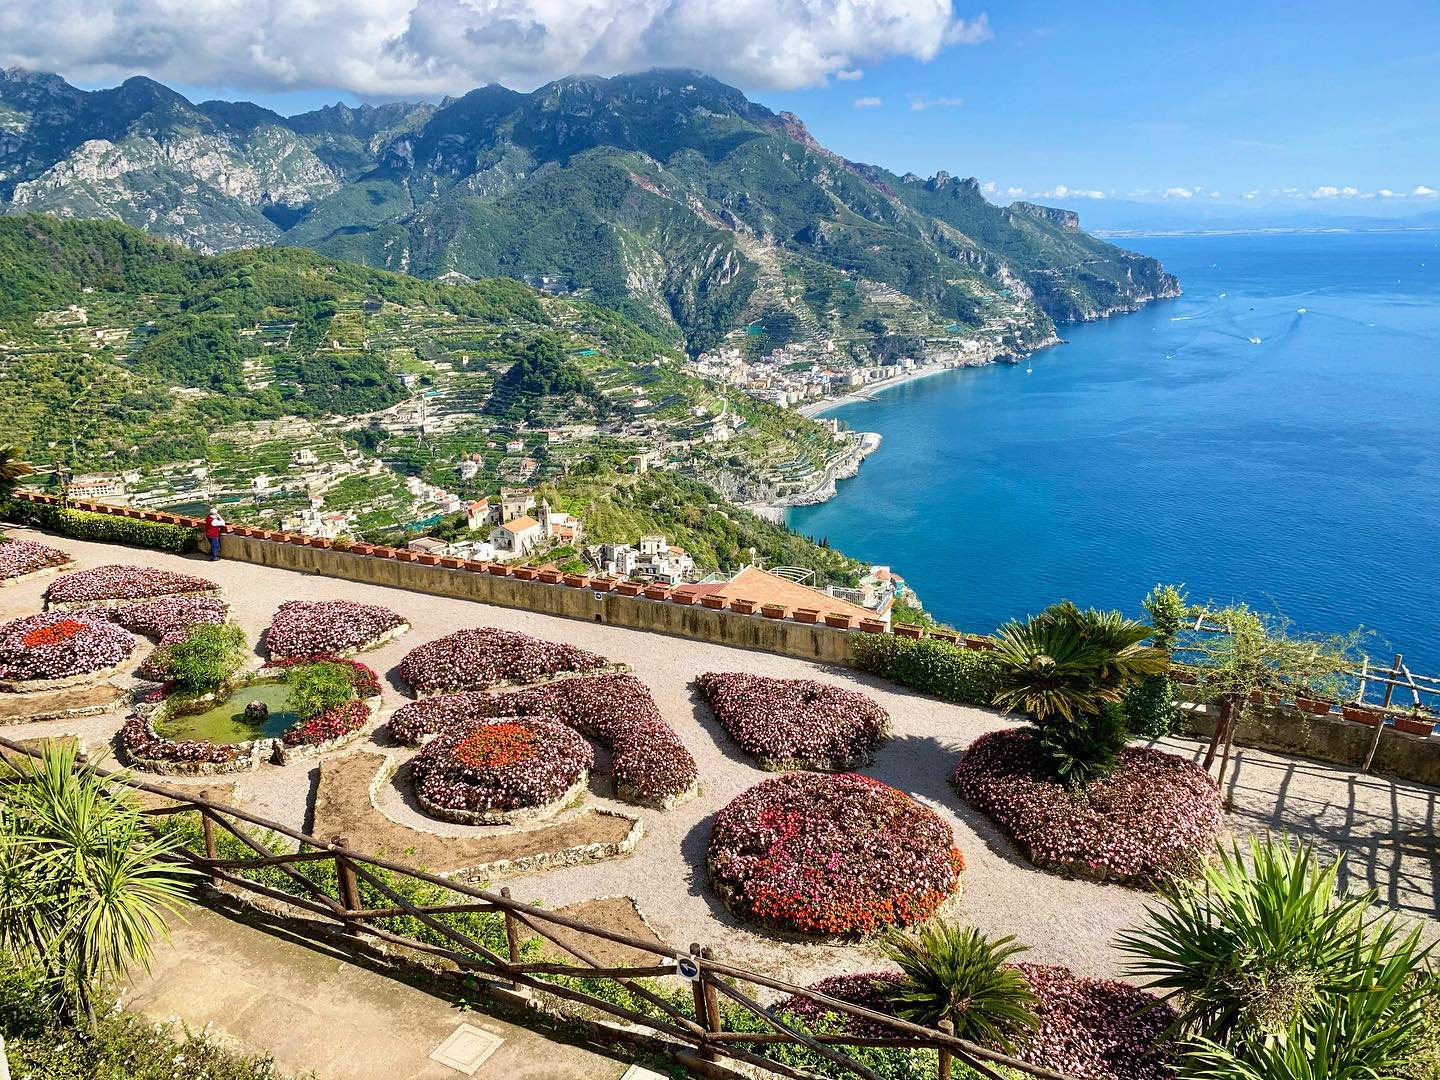 The famous gardens of Villa Rufolo 🌺
.
.
.
#villarufolo #villarufologardens #villarufoloravello #villaruffolo #villarufologarden #villarufoloeravello #villa #rufolo #ravello #ravelloitaly #ravelloamalfi #ravelloamalficoast #ravelloamalfipositano #amalfi #positano #amalficoast #amalficoastitaly #amalficoast_italy #sunny #sky #sea #travel #italia #italy #italien #amalfiküste #italytravel #italytrip #gardensvillarufolo #gardenvillarufolo